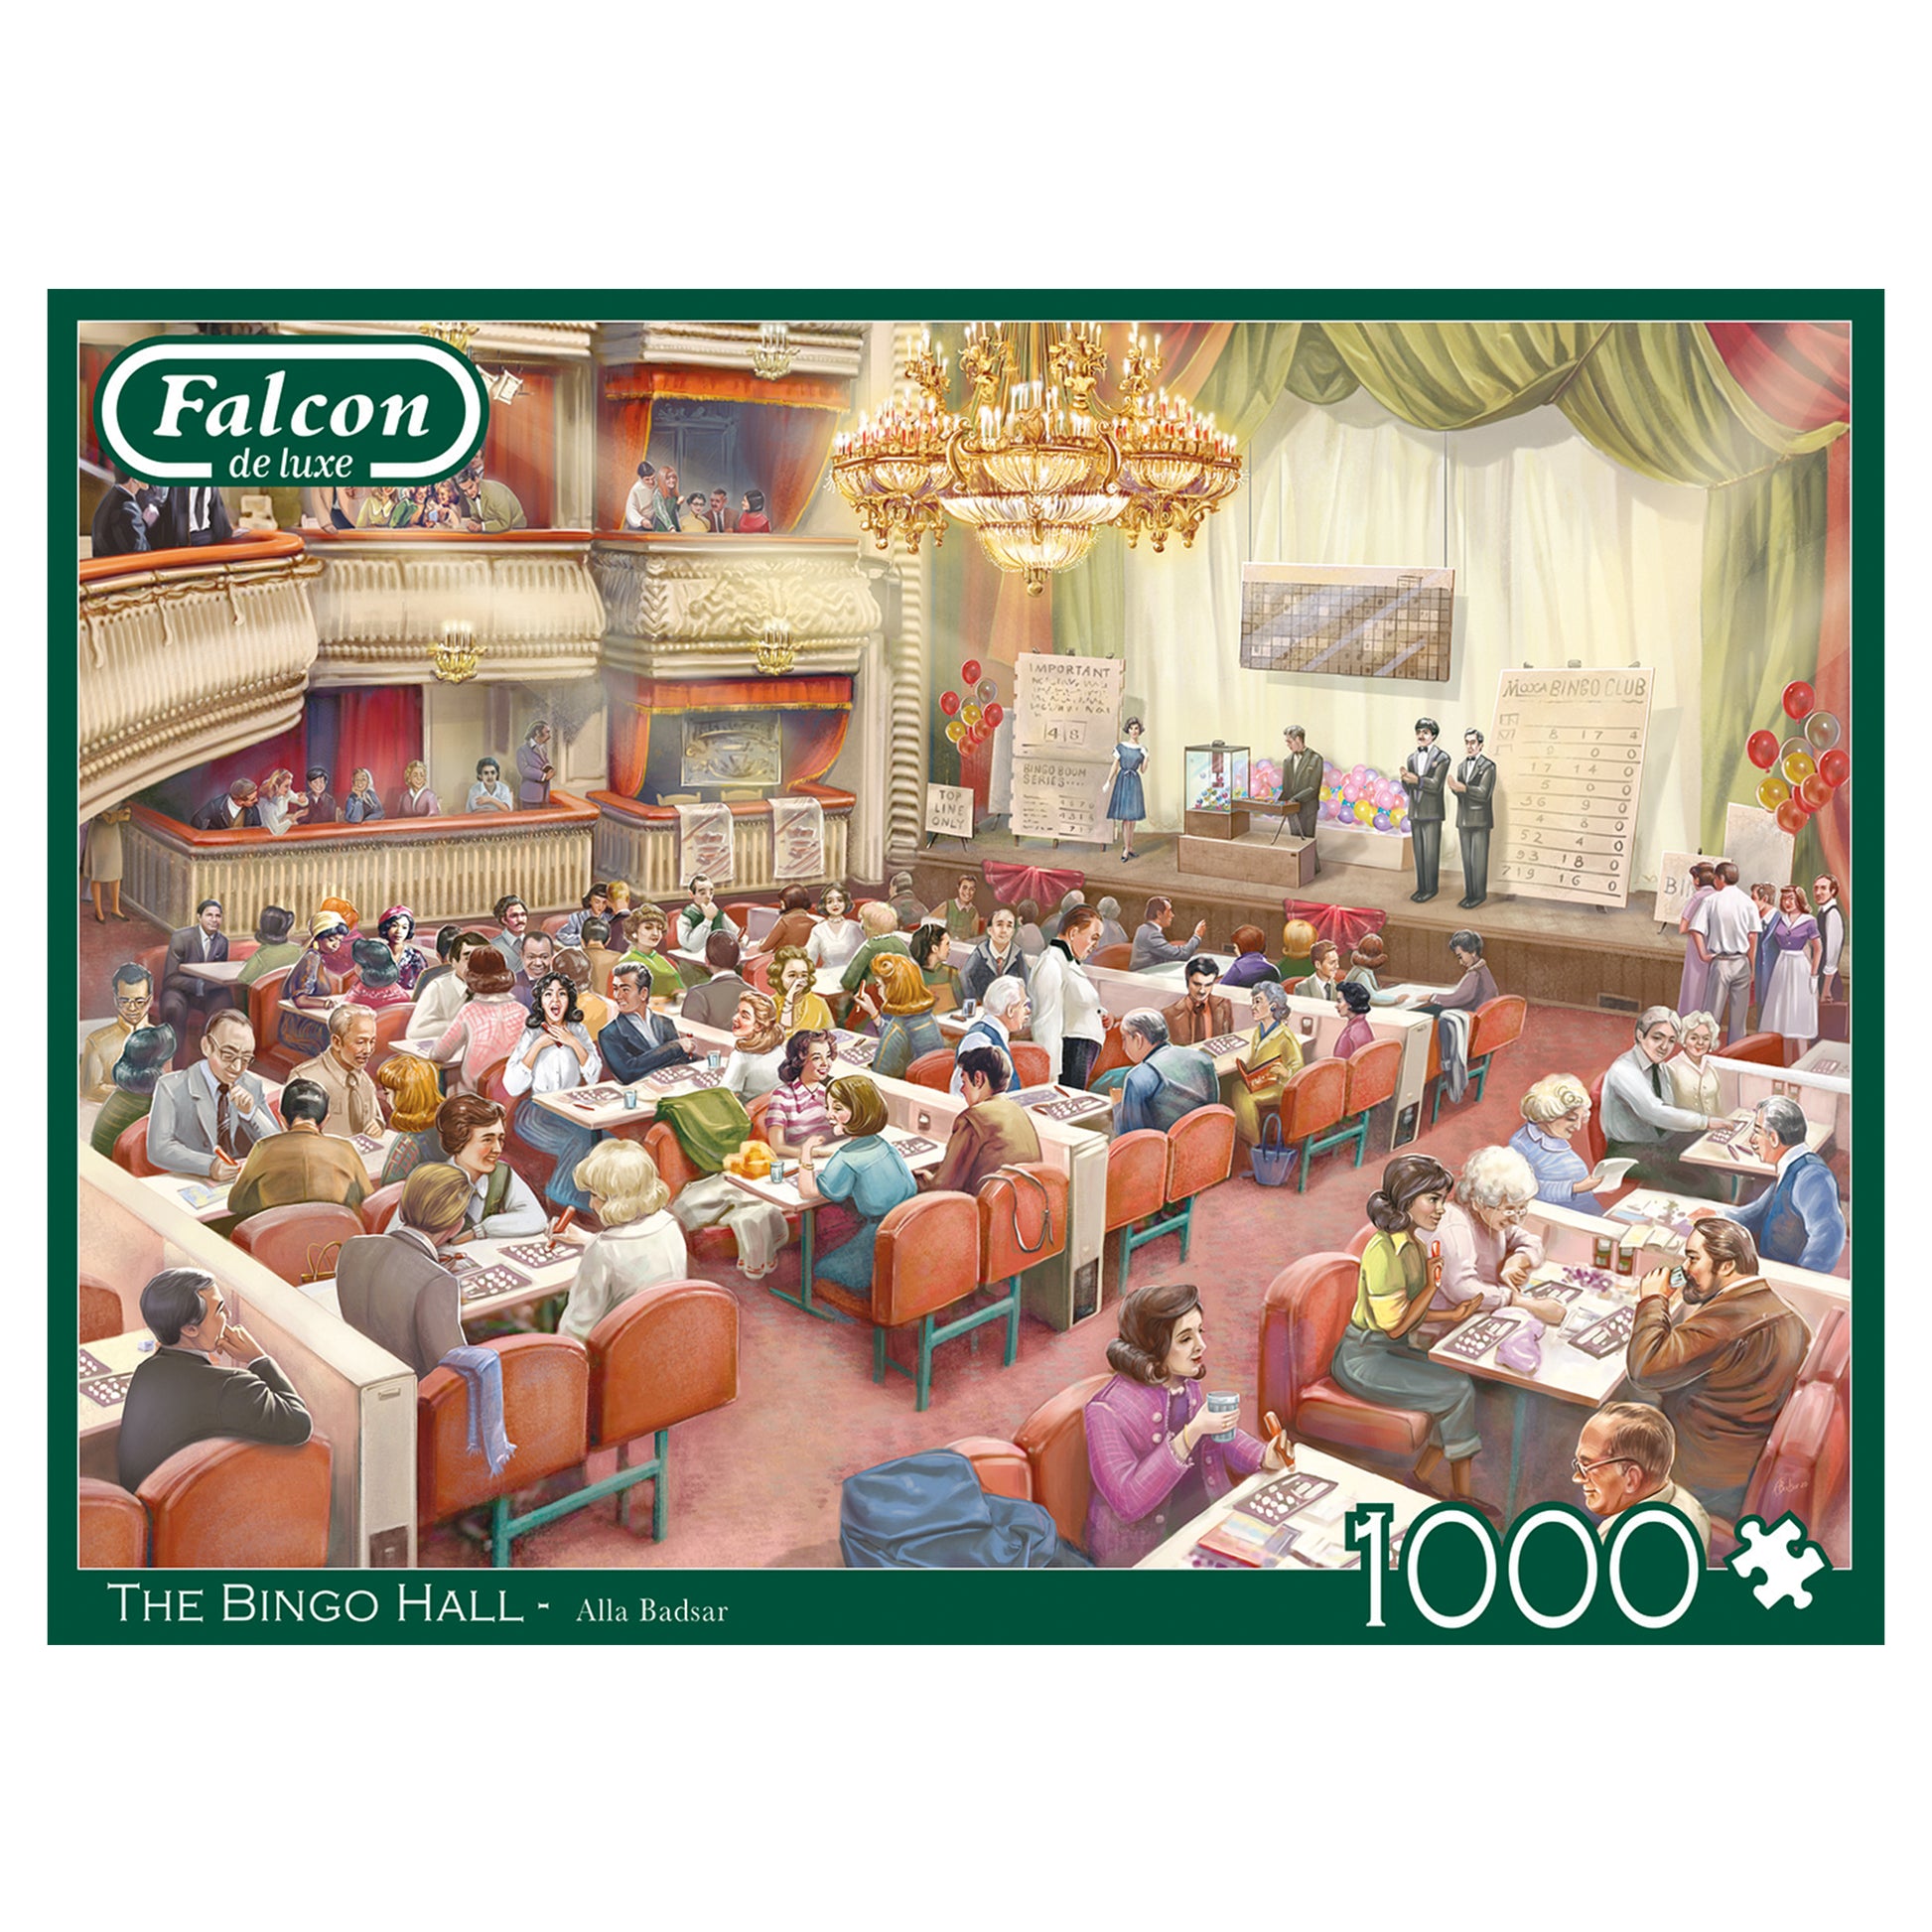 Falcon - The Bingo Hall (1000 pieces) - product image - Jumboplay.com